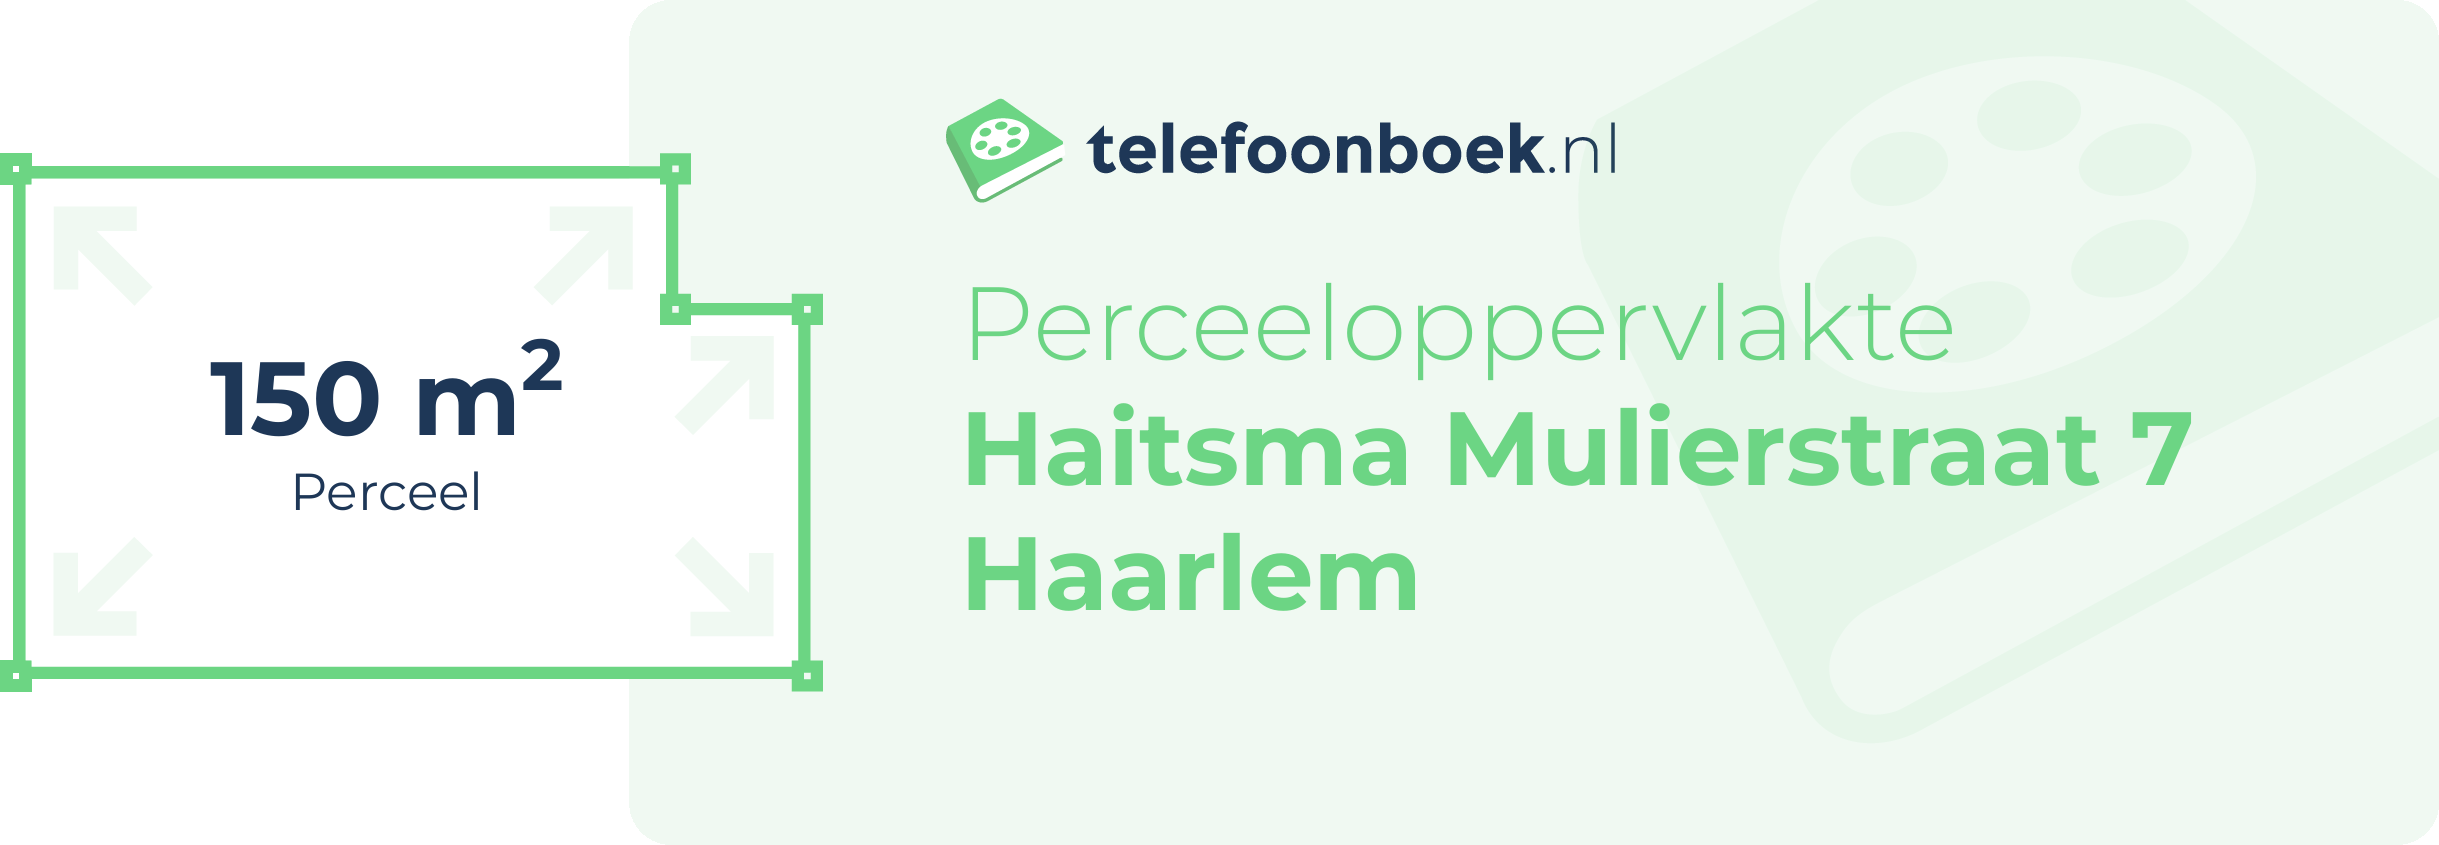 Perceeloppervlakte Haitsma Mulierstraat 7 Haarlem